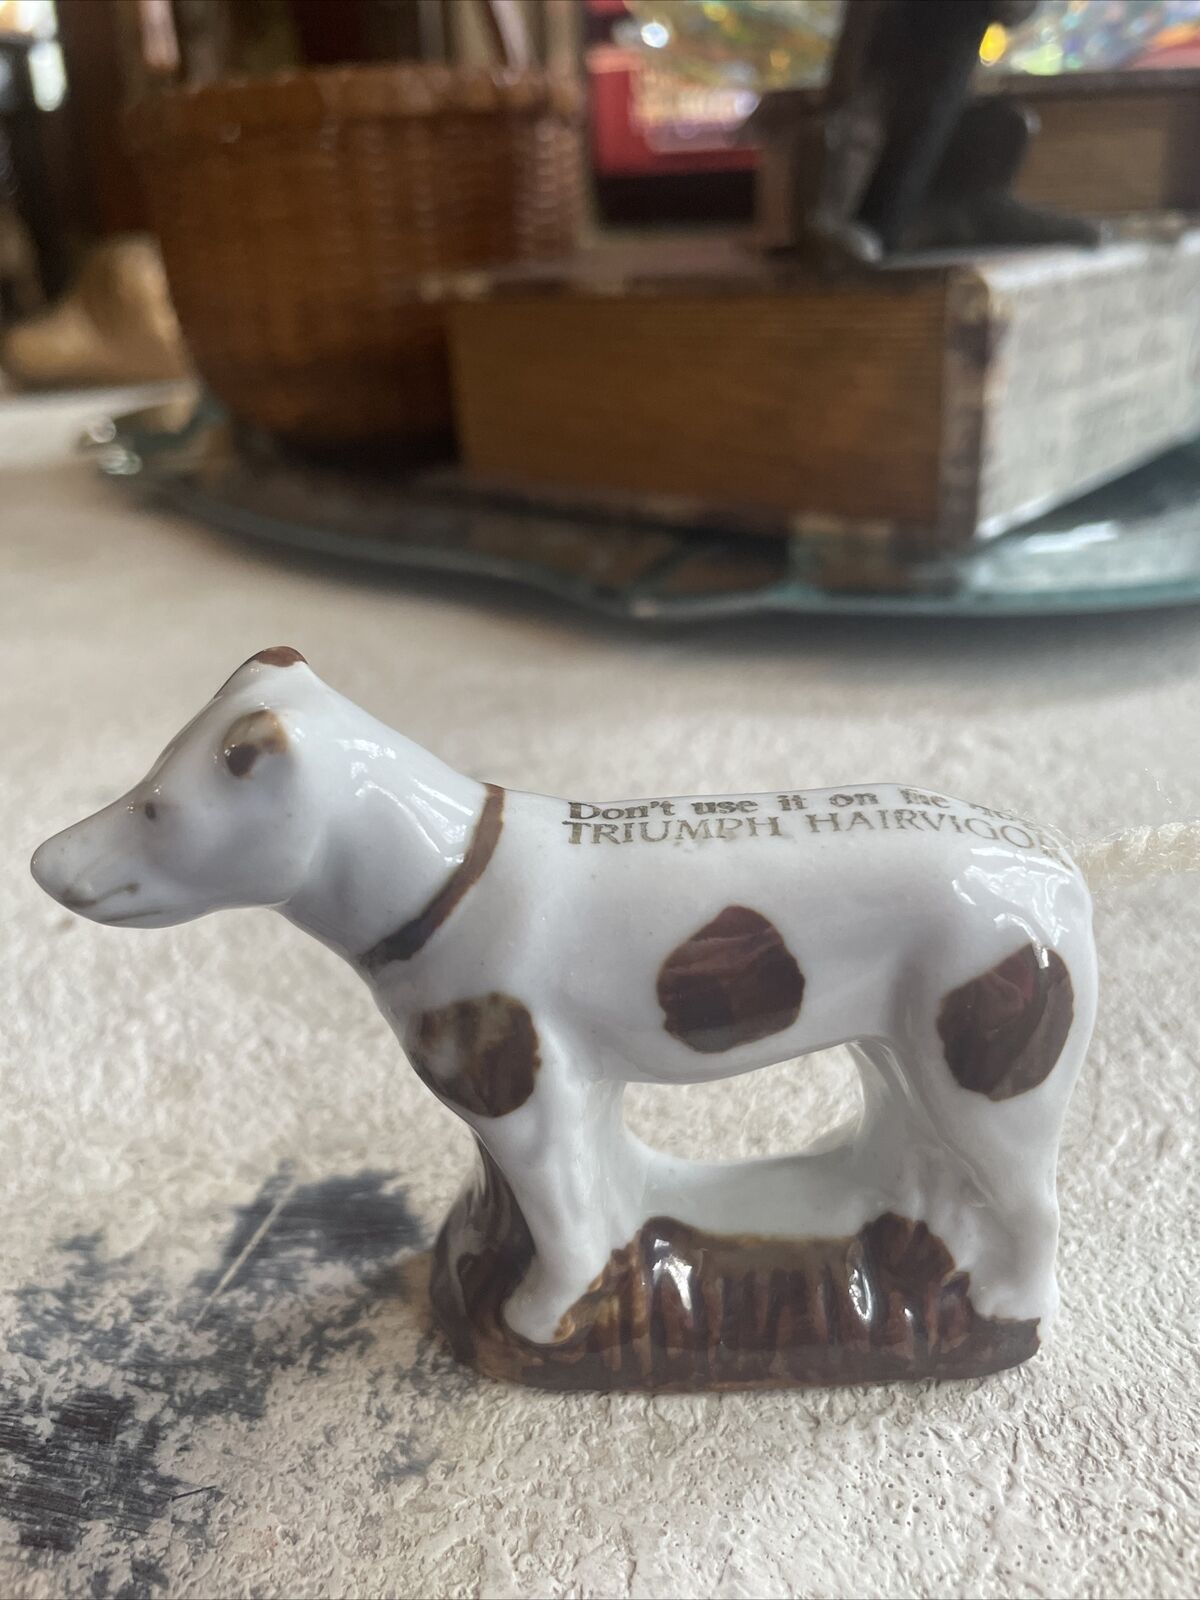 Vintage Advertising Porcelain Dog “Triumph Hairvigor” Advertisement Figurine